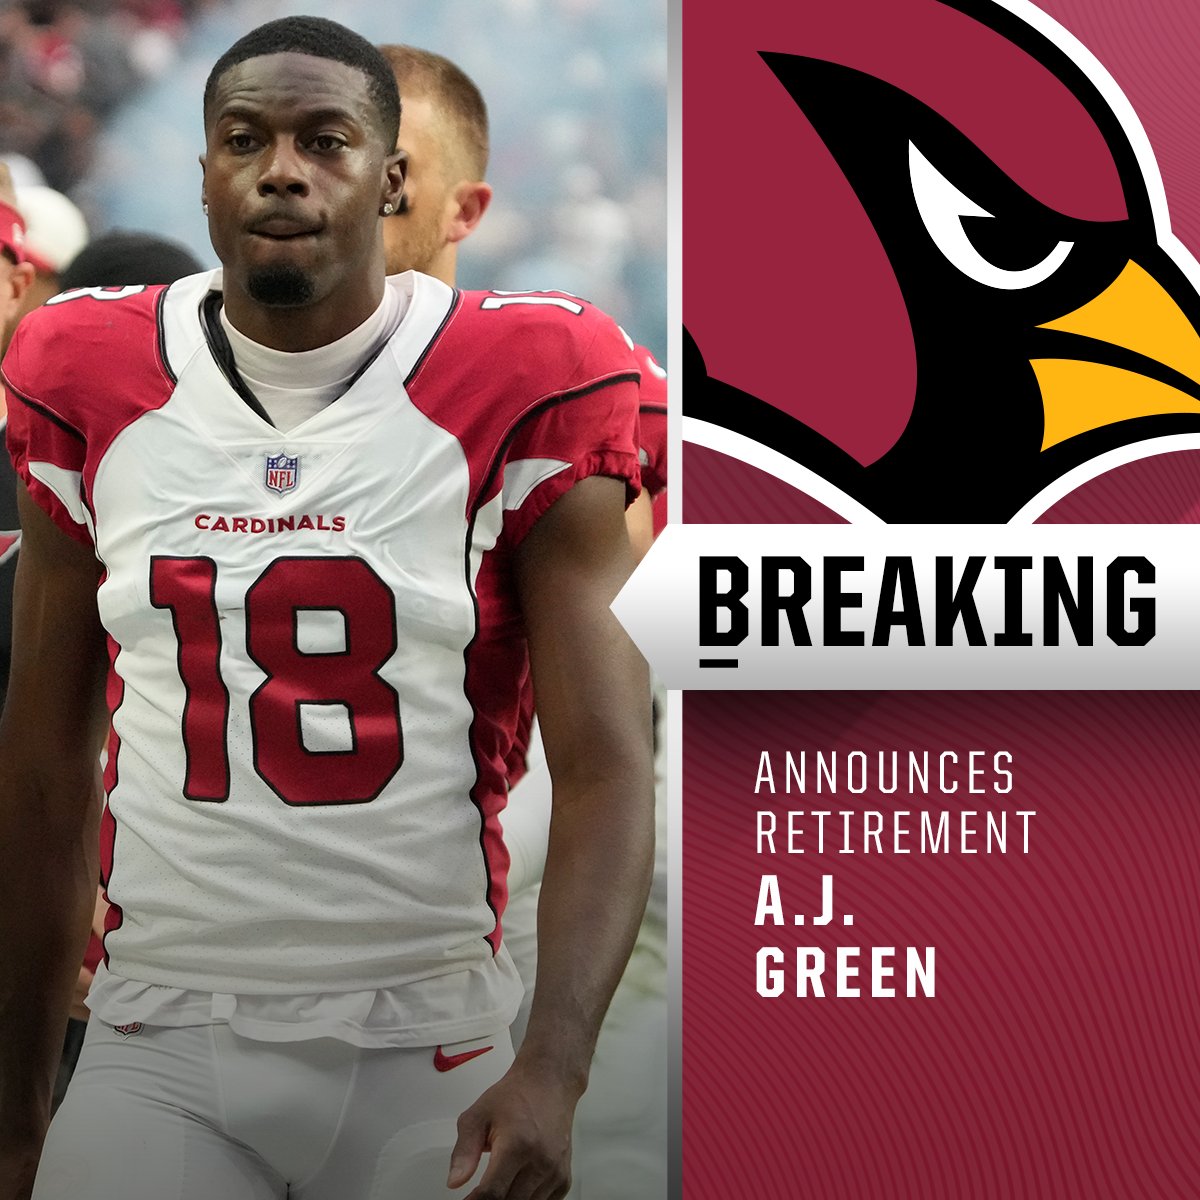 I S S V on Twitter "RT NFL 7x Pro Bowl WR A.J. Green announces his